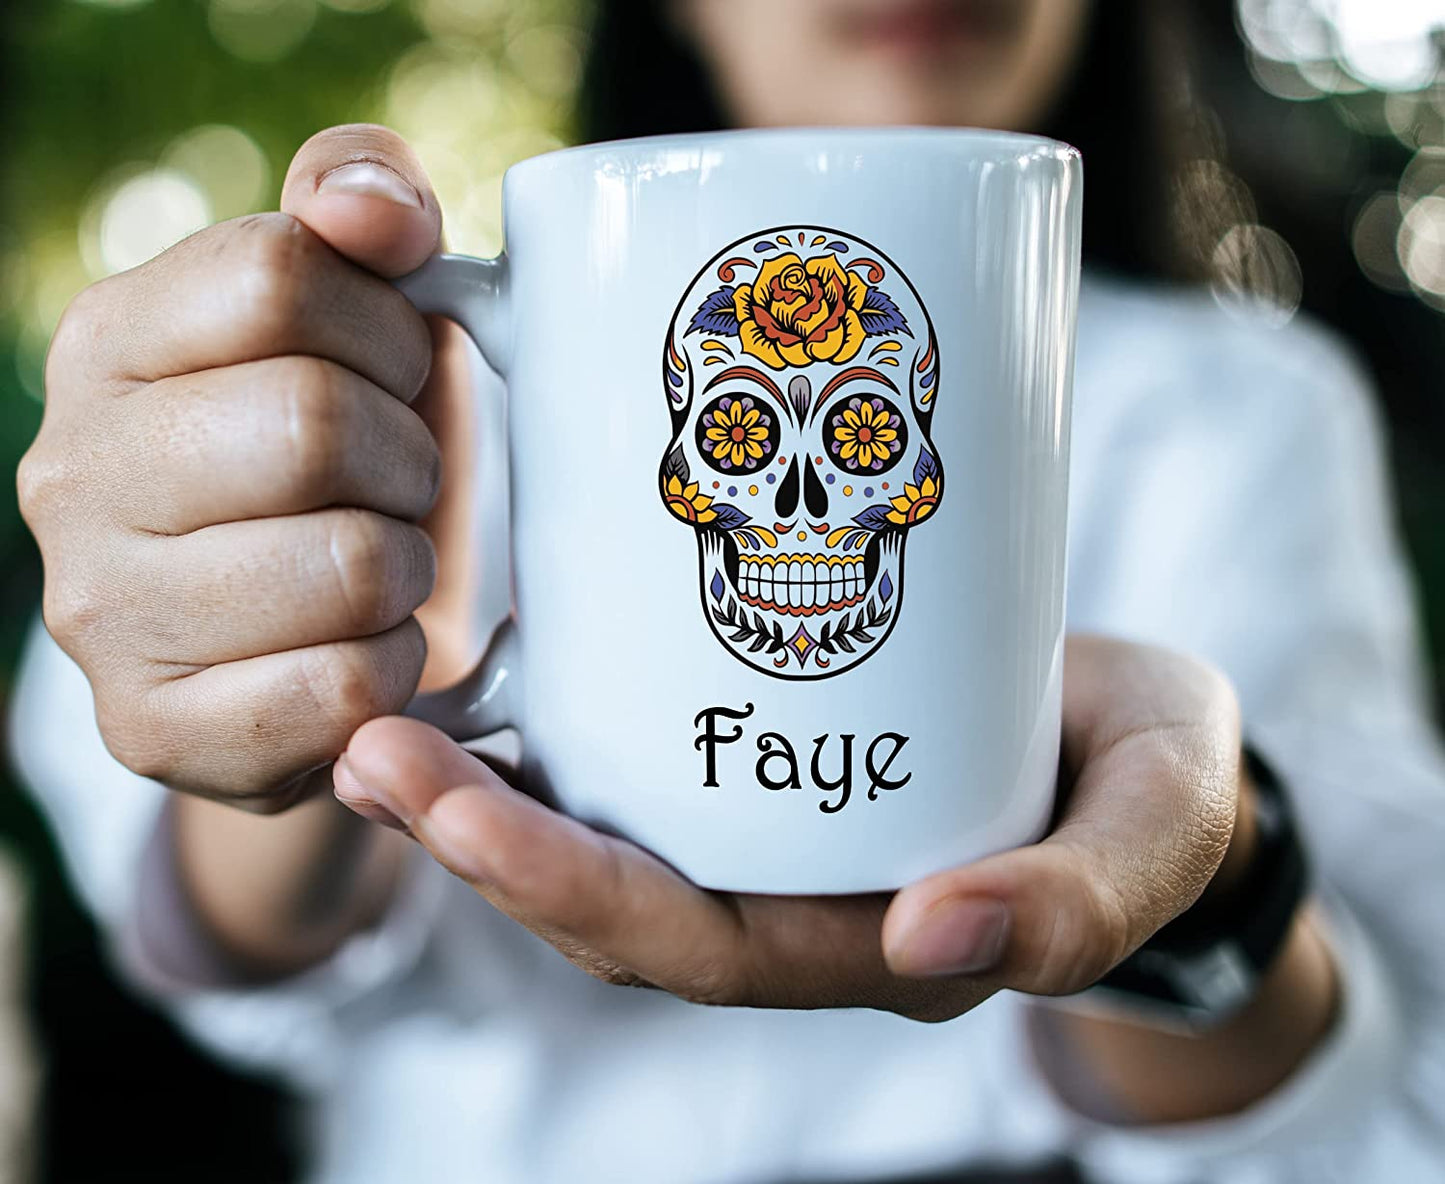 Personalised Decorative Skull Ceramic Mug